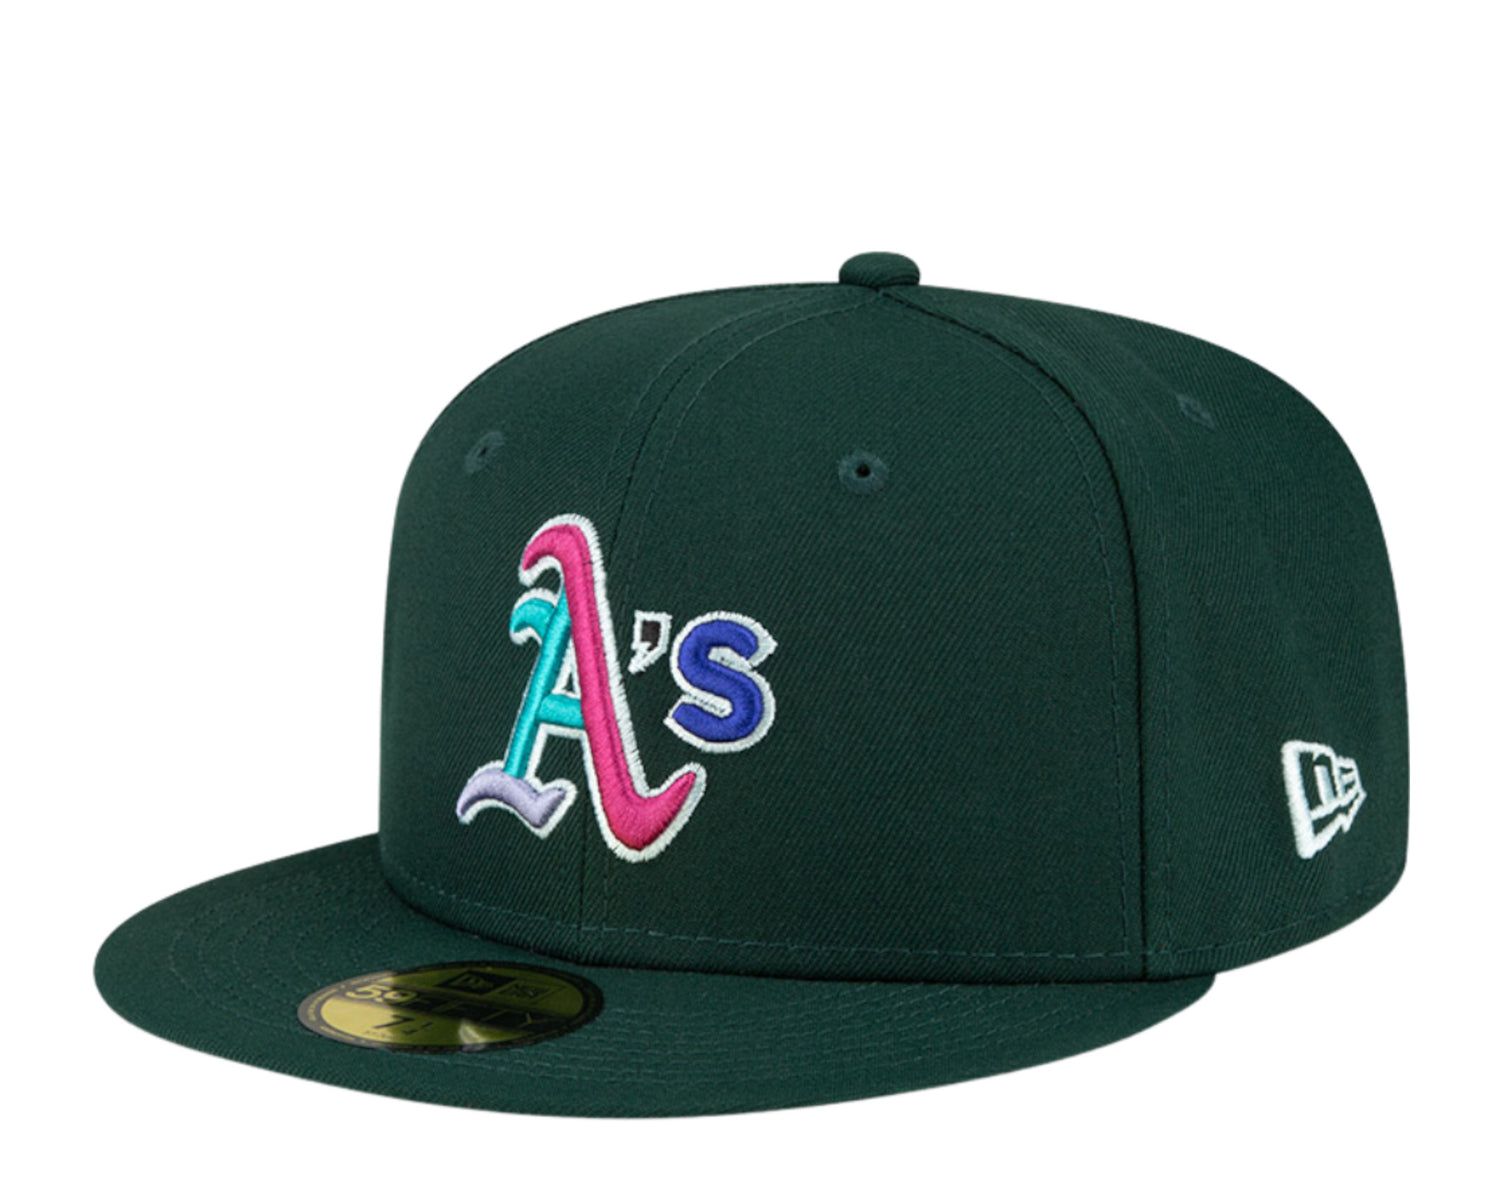 New Era 59Fifty MLB Oakland Athletics Polar Lights Fitted Hat